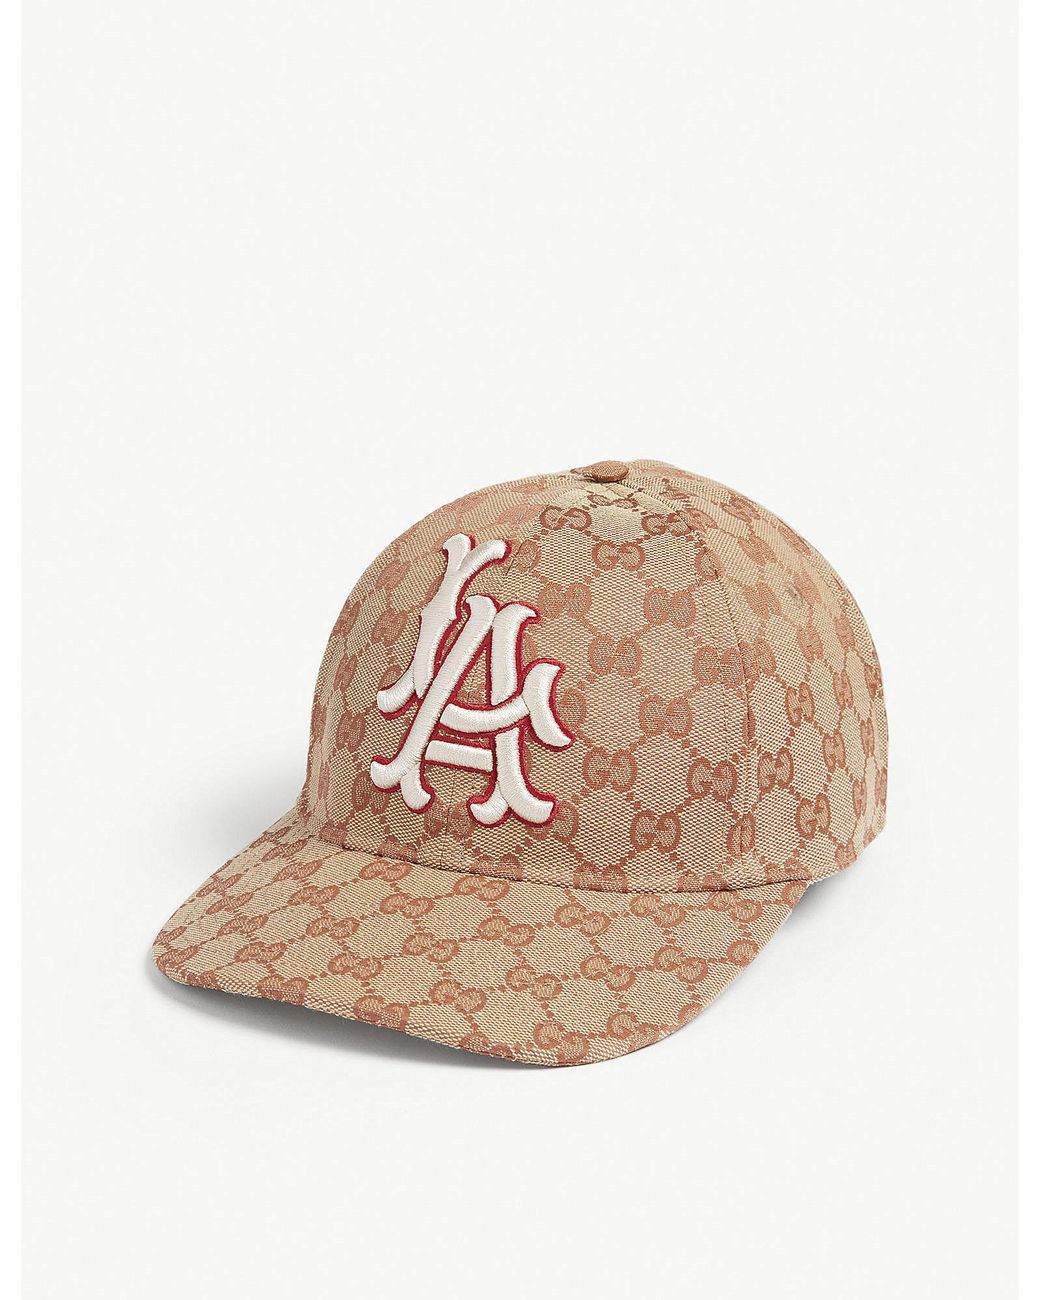 Gucci Baseball Hat in Natural for Men